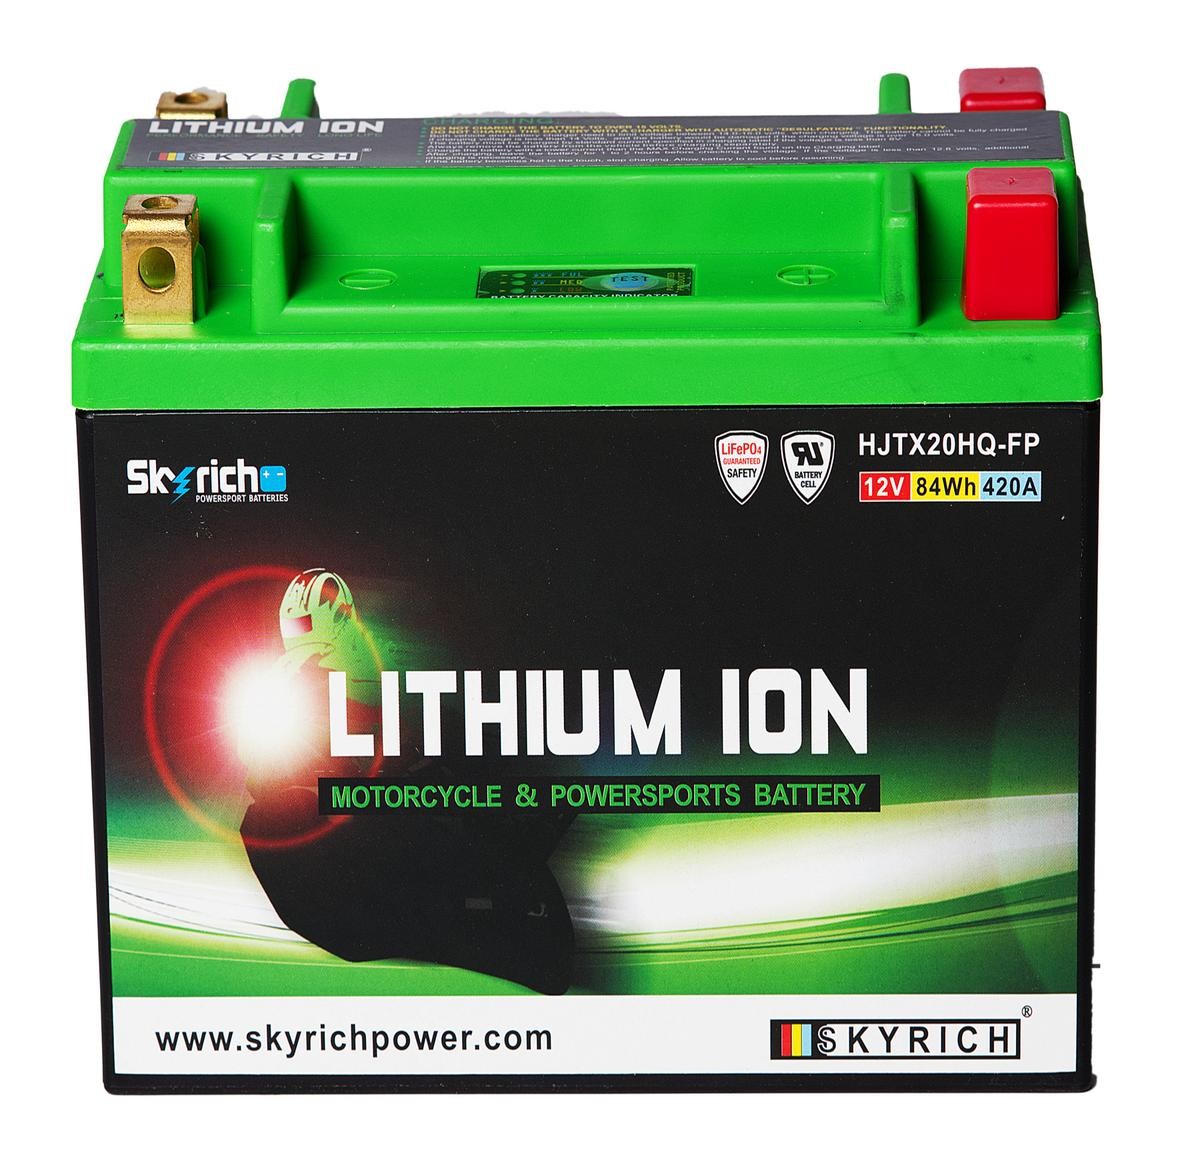 Car battery SKYRICH LITHIUM ION 12V 7Ah 420A N Li-Ion Battery - HJTX20HQ-FP